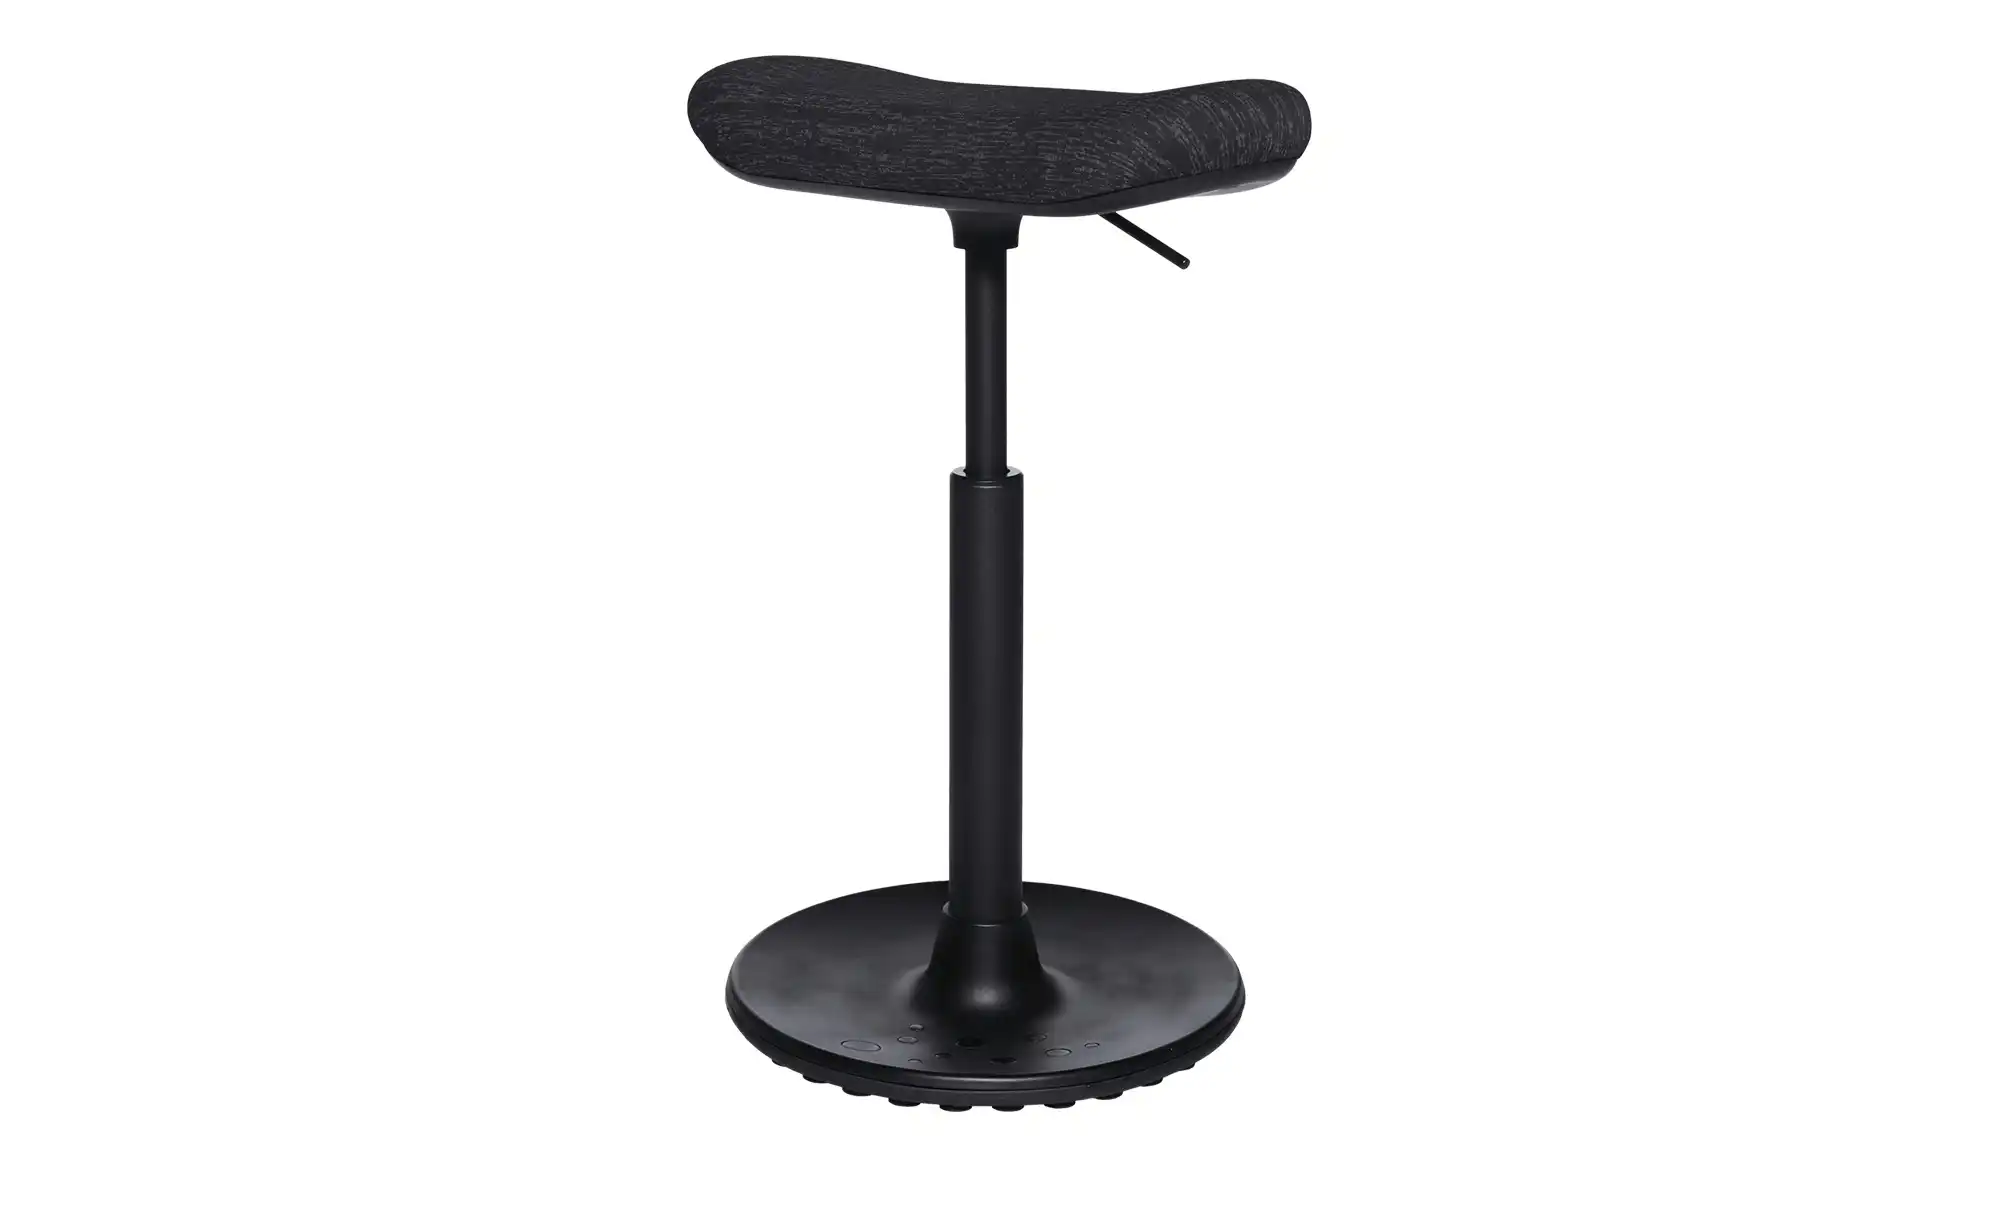 Hocker Sitness UP 2 ¦ schwarz Stühle Bürostühle Drehstühle Höffner  - Onlineshop Möbel Höffner